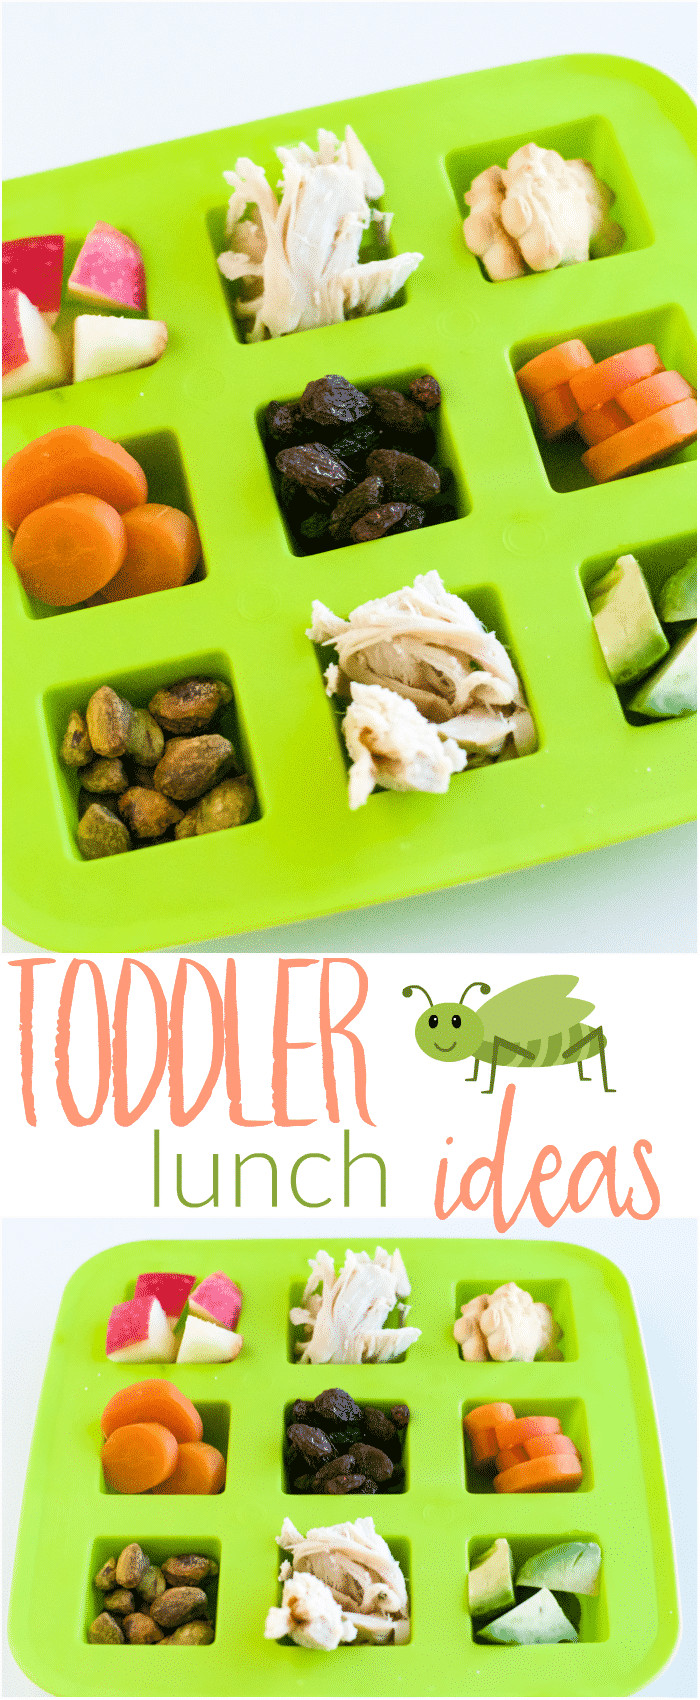 Toddler Dinner Ideas
 Toddler Lunch Ideas Fantabulosity